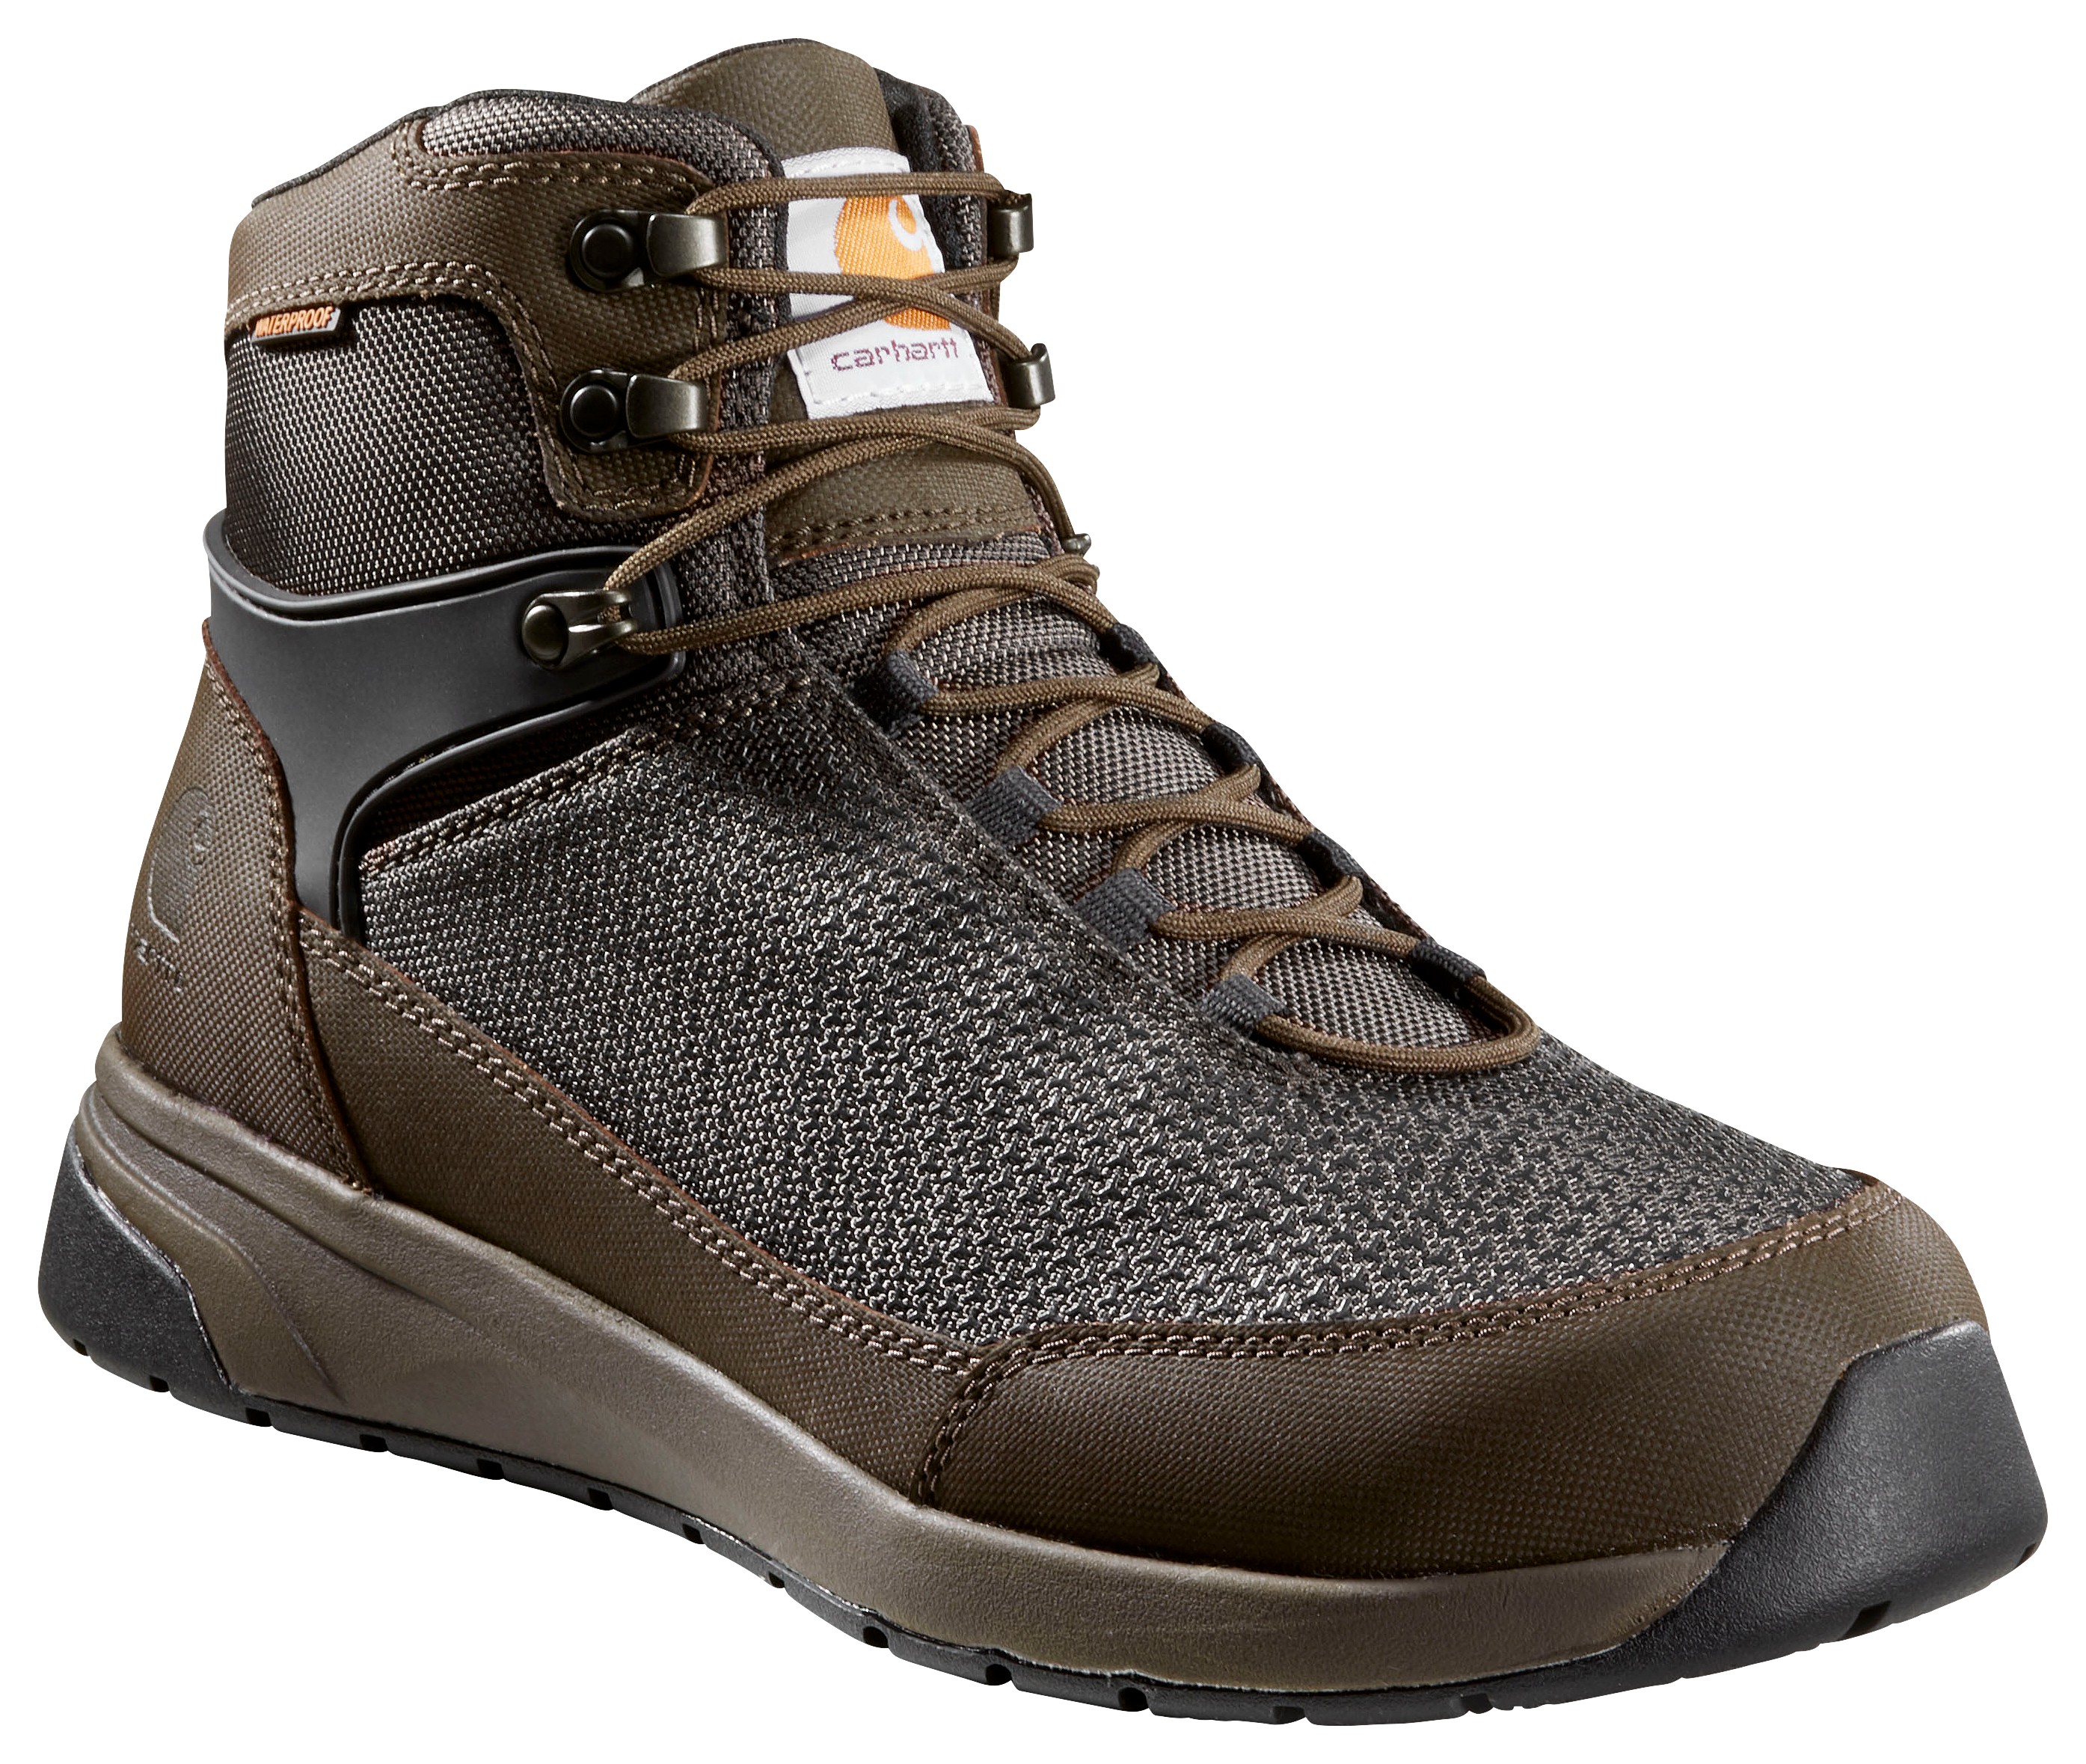 Carhartt Force 6"" Nano Composite-Toe Work Boots for Men - Espresso - 9.5W